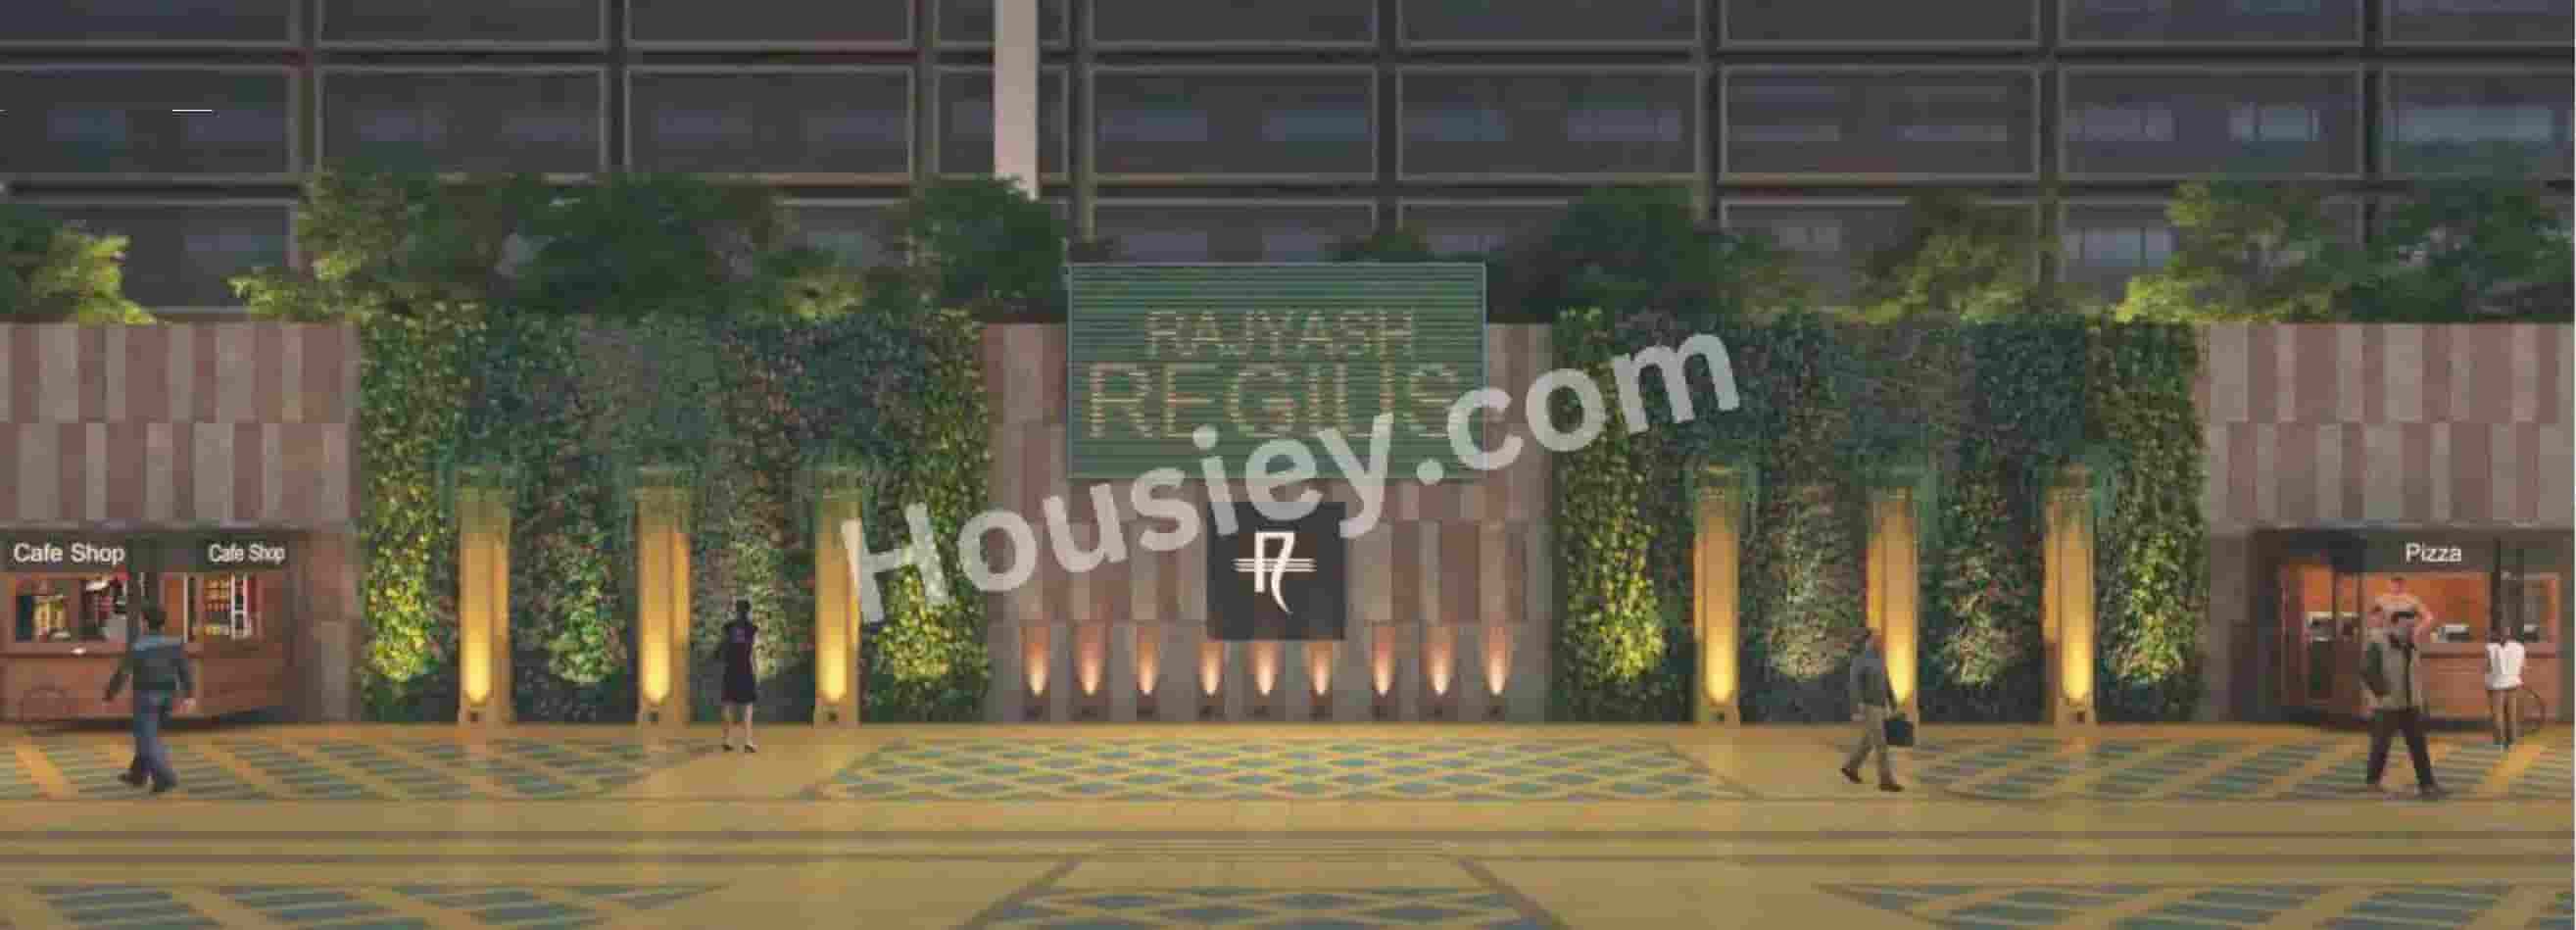 Rajyash Regius Ahmedabad